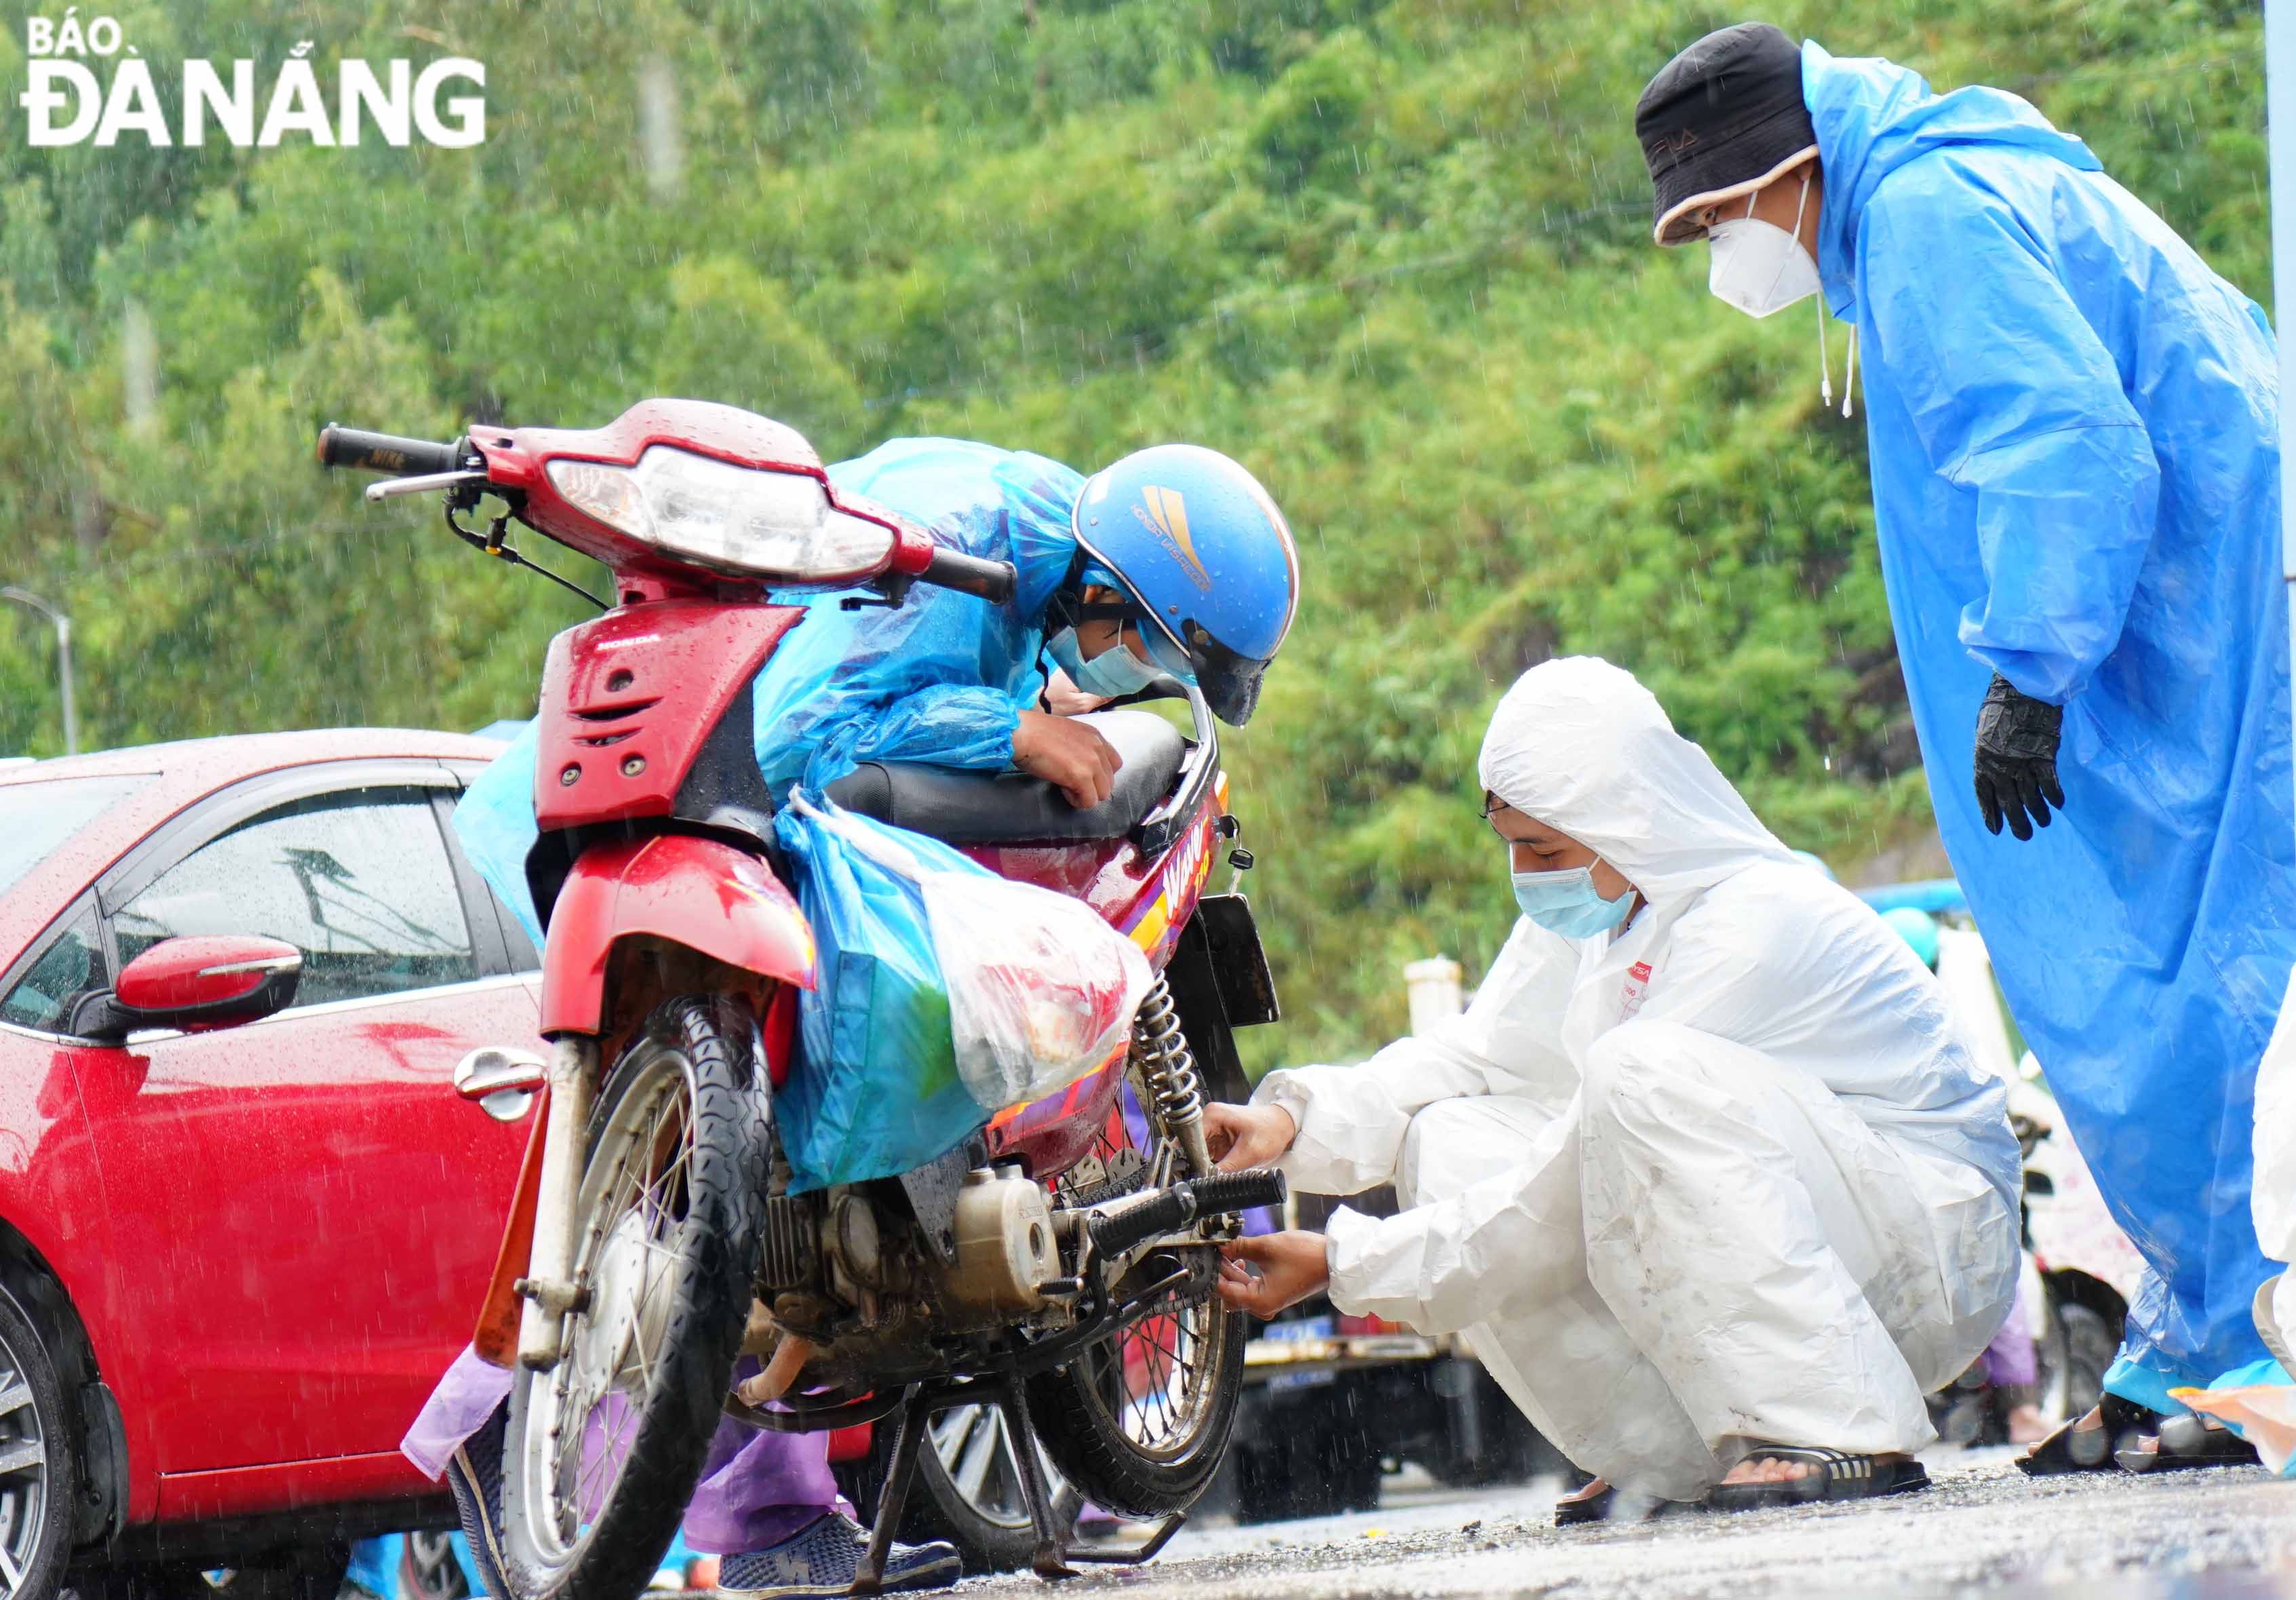 SOS team was repairing motorbikes for returnees on Hai Van Pass. Photo: NGOC HA